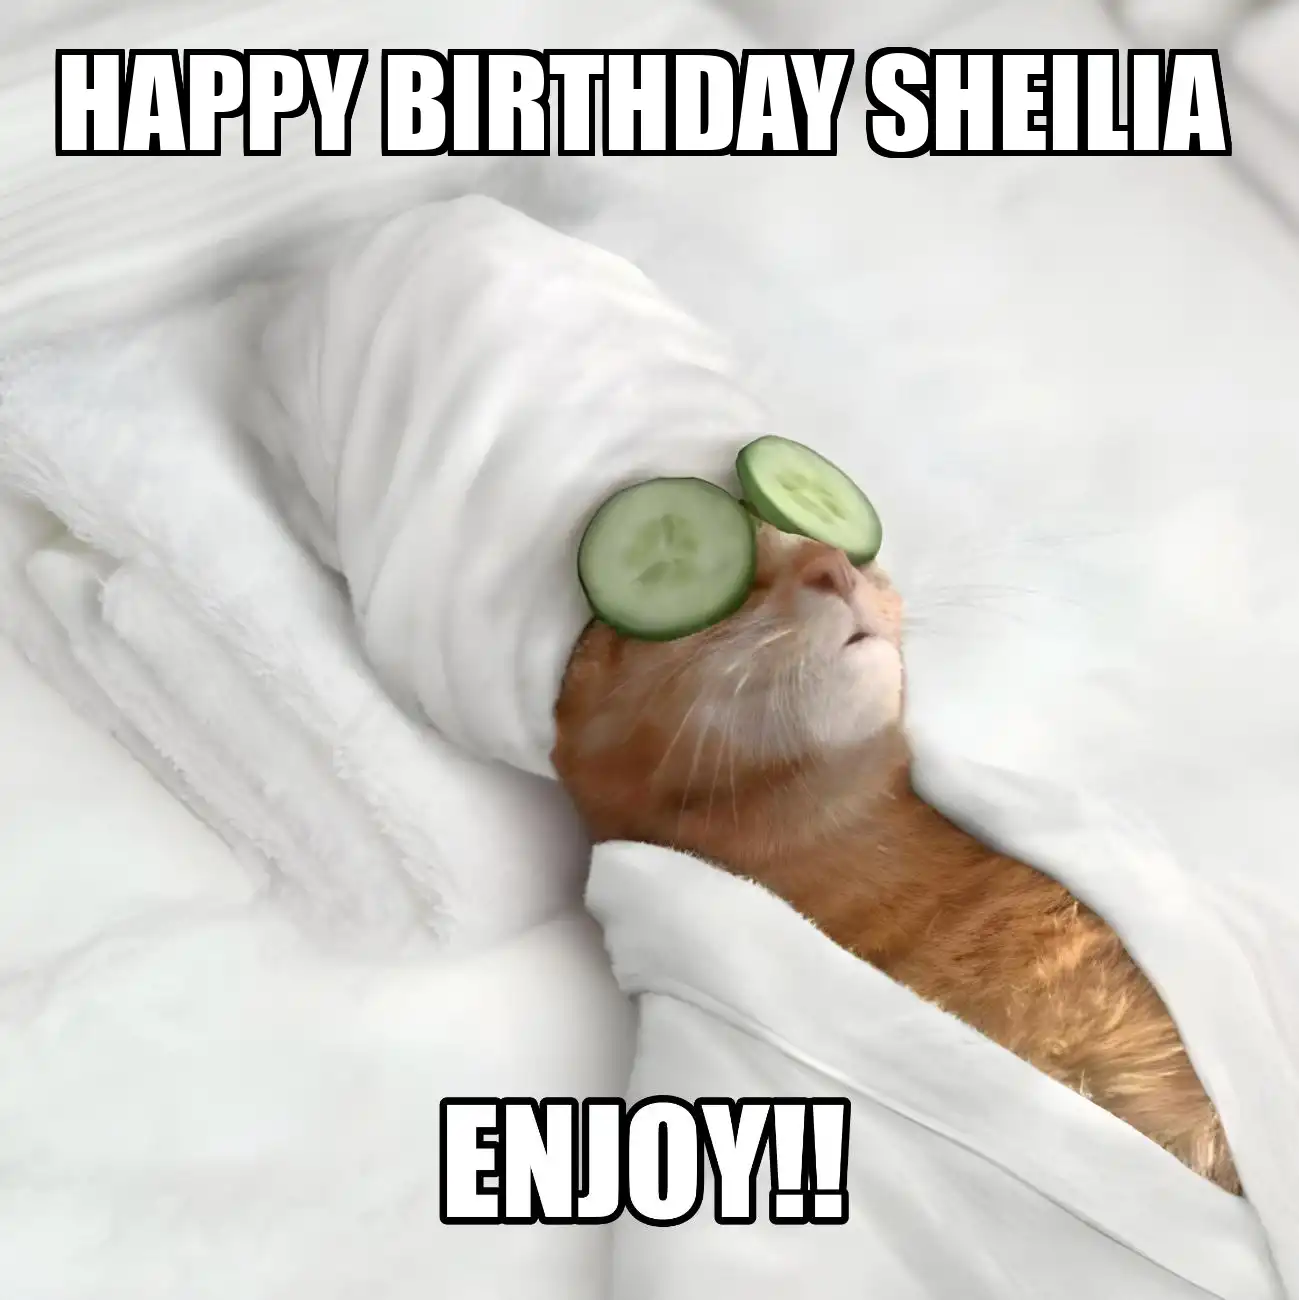 Happy Birthday Sheilia Enjoy Cat Meme